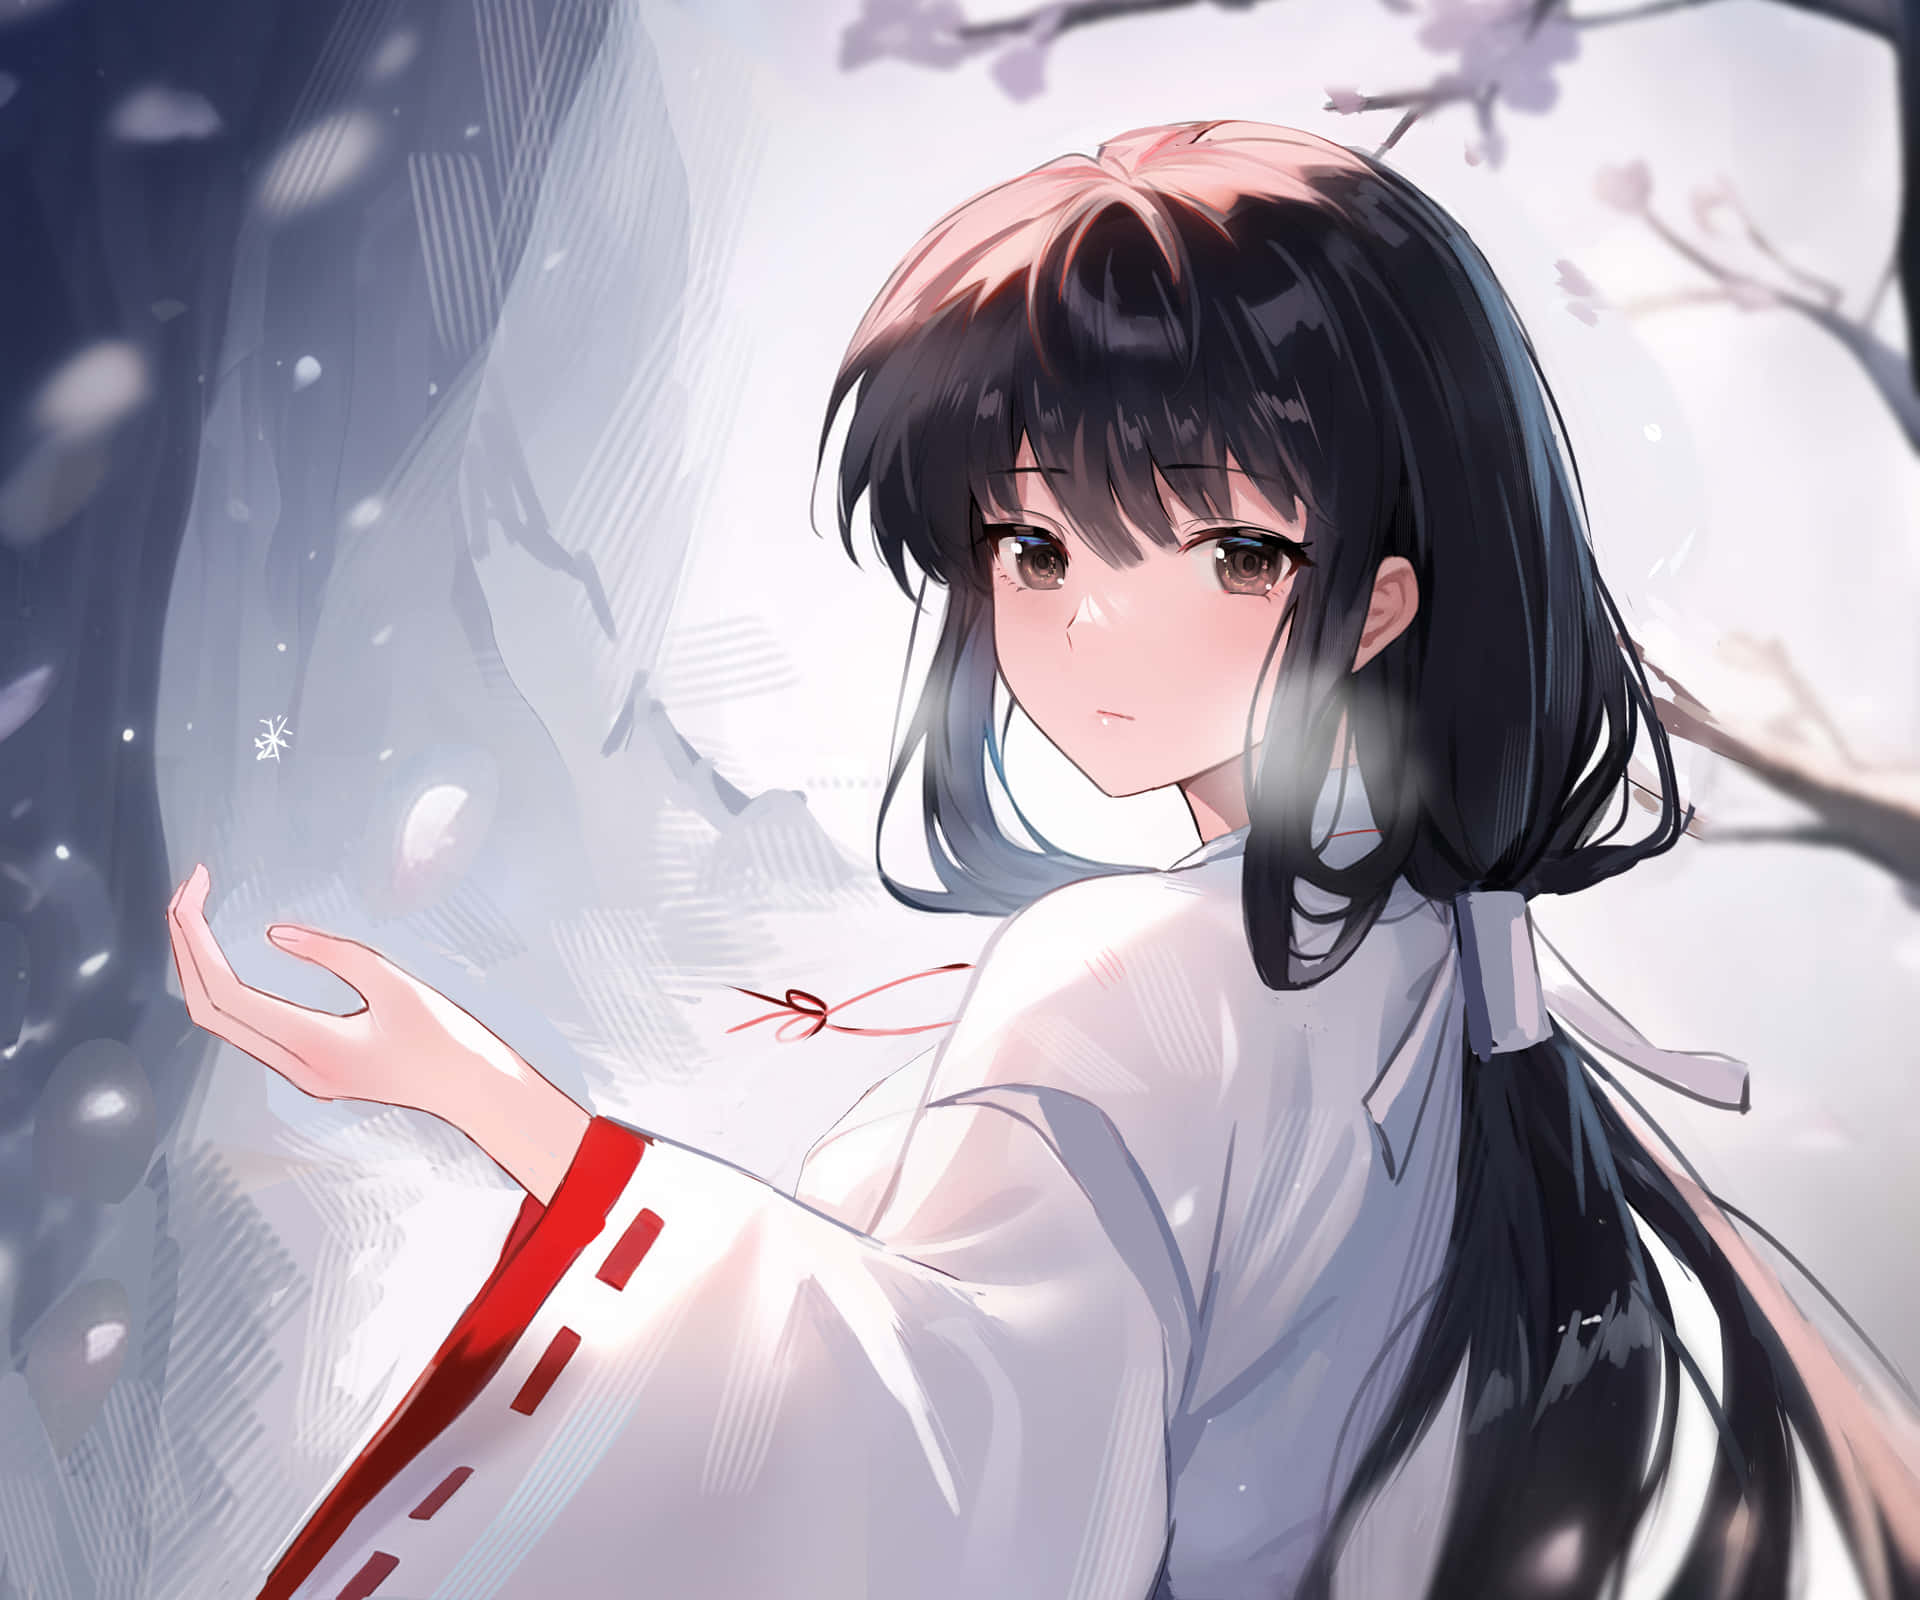 Kikyo - The Beautiful Priestess in a Serene Background Wallpaper